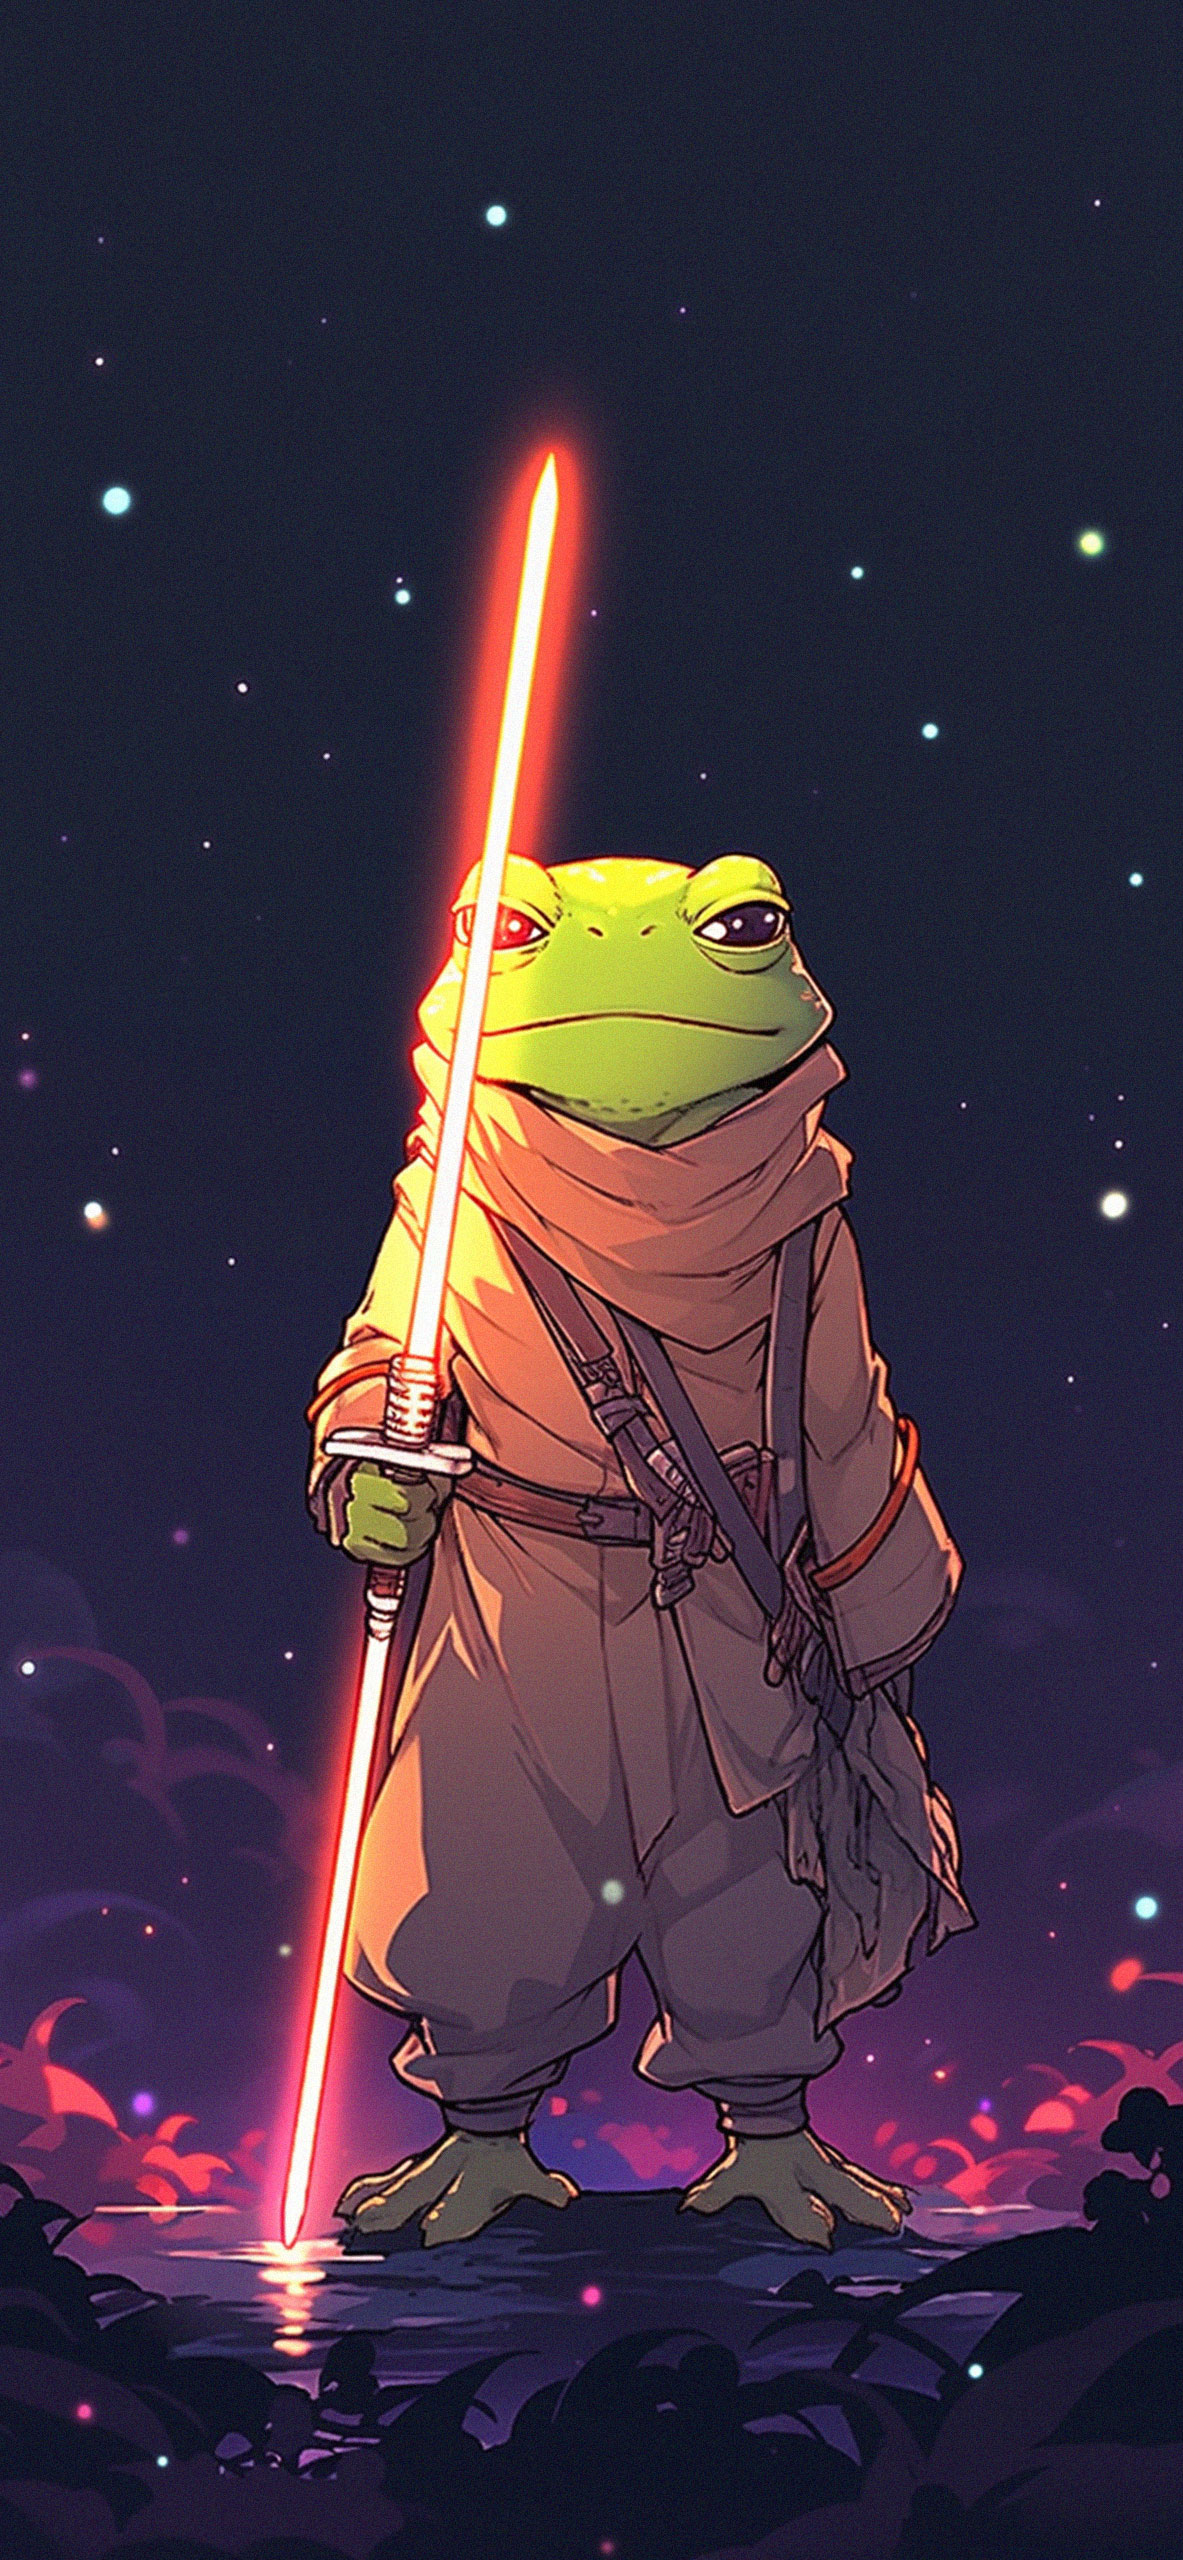 Frog with laser saber art wallpaper Star wars style art wallpa